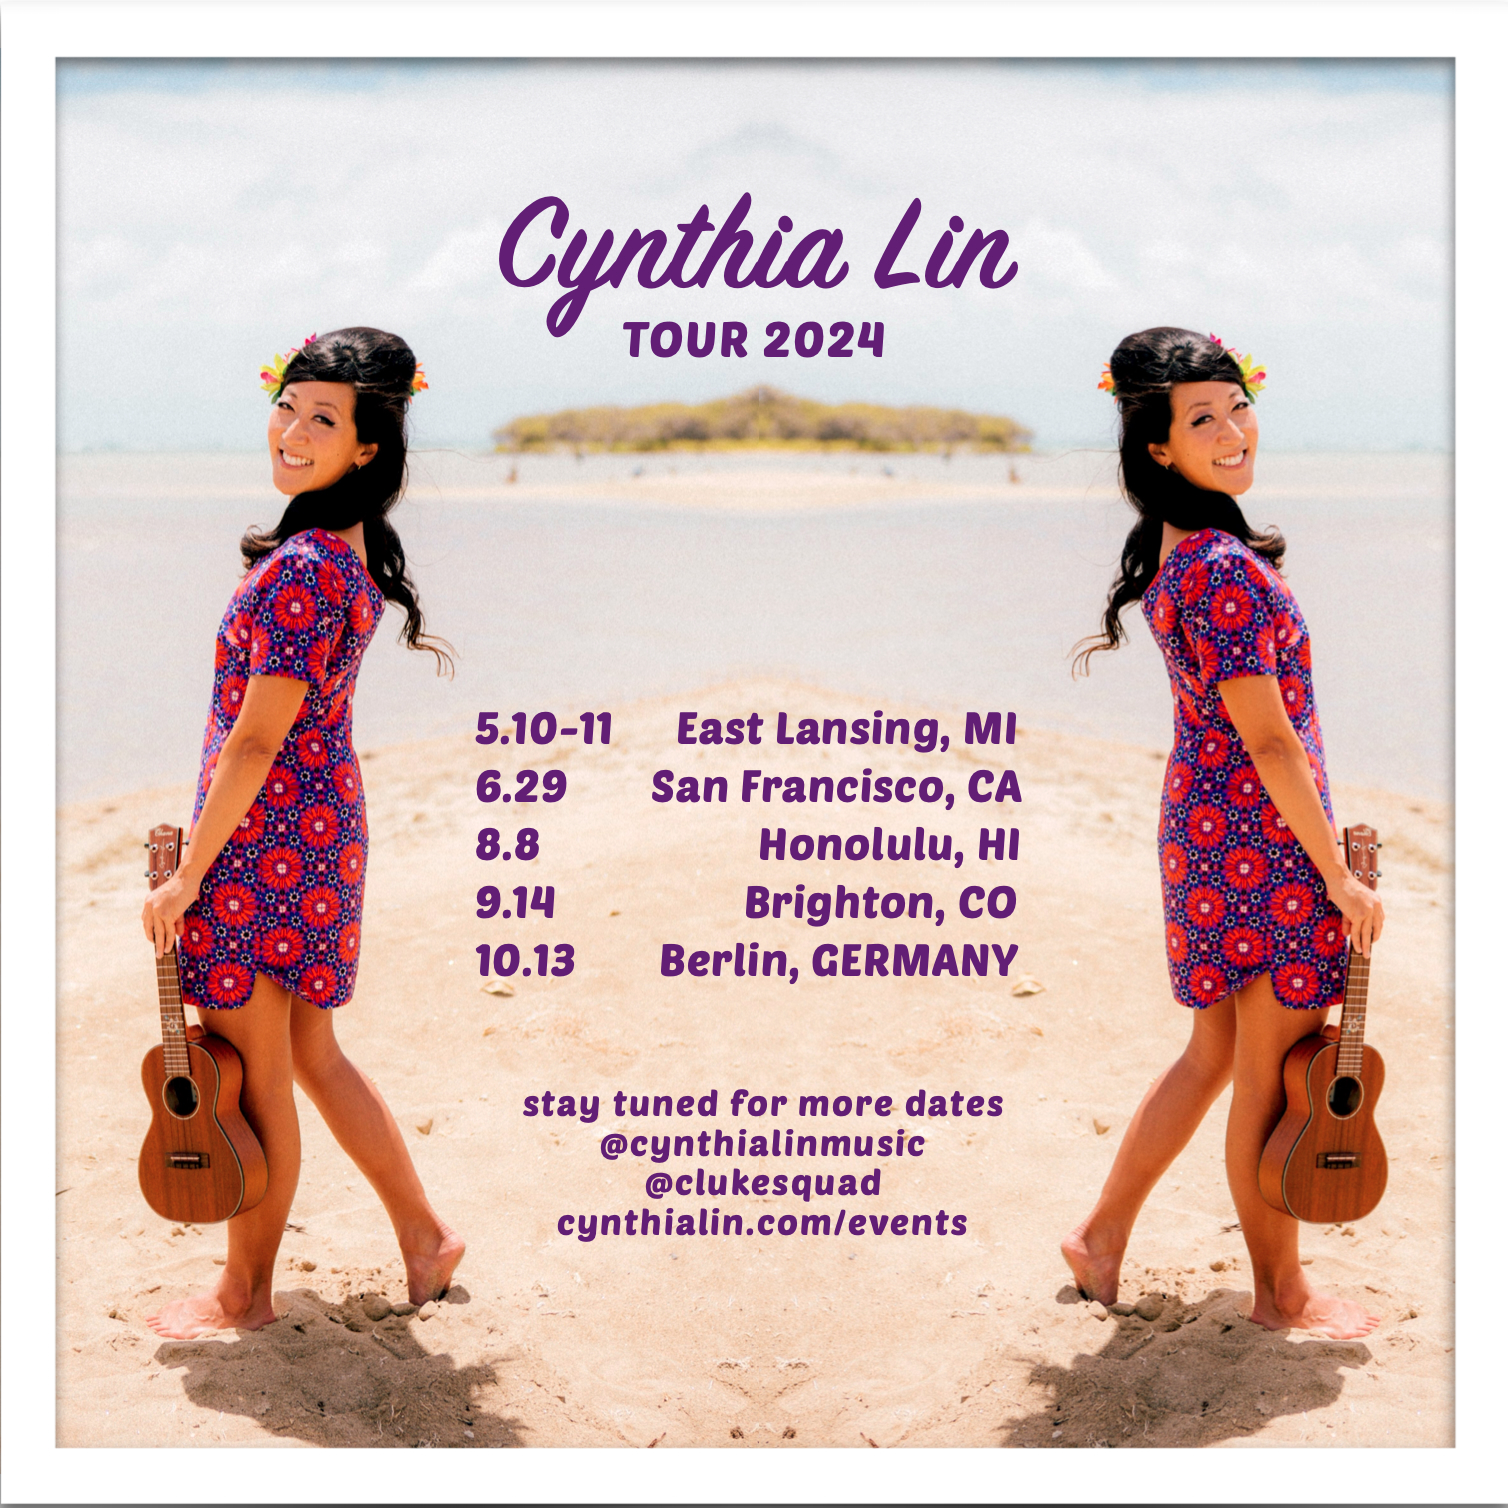 Cynthia Lin tour dates in 2024 includes Michigan, Honolulu, and Colorado